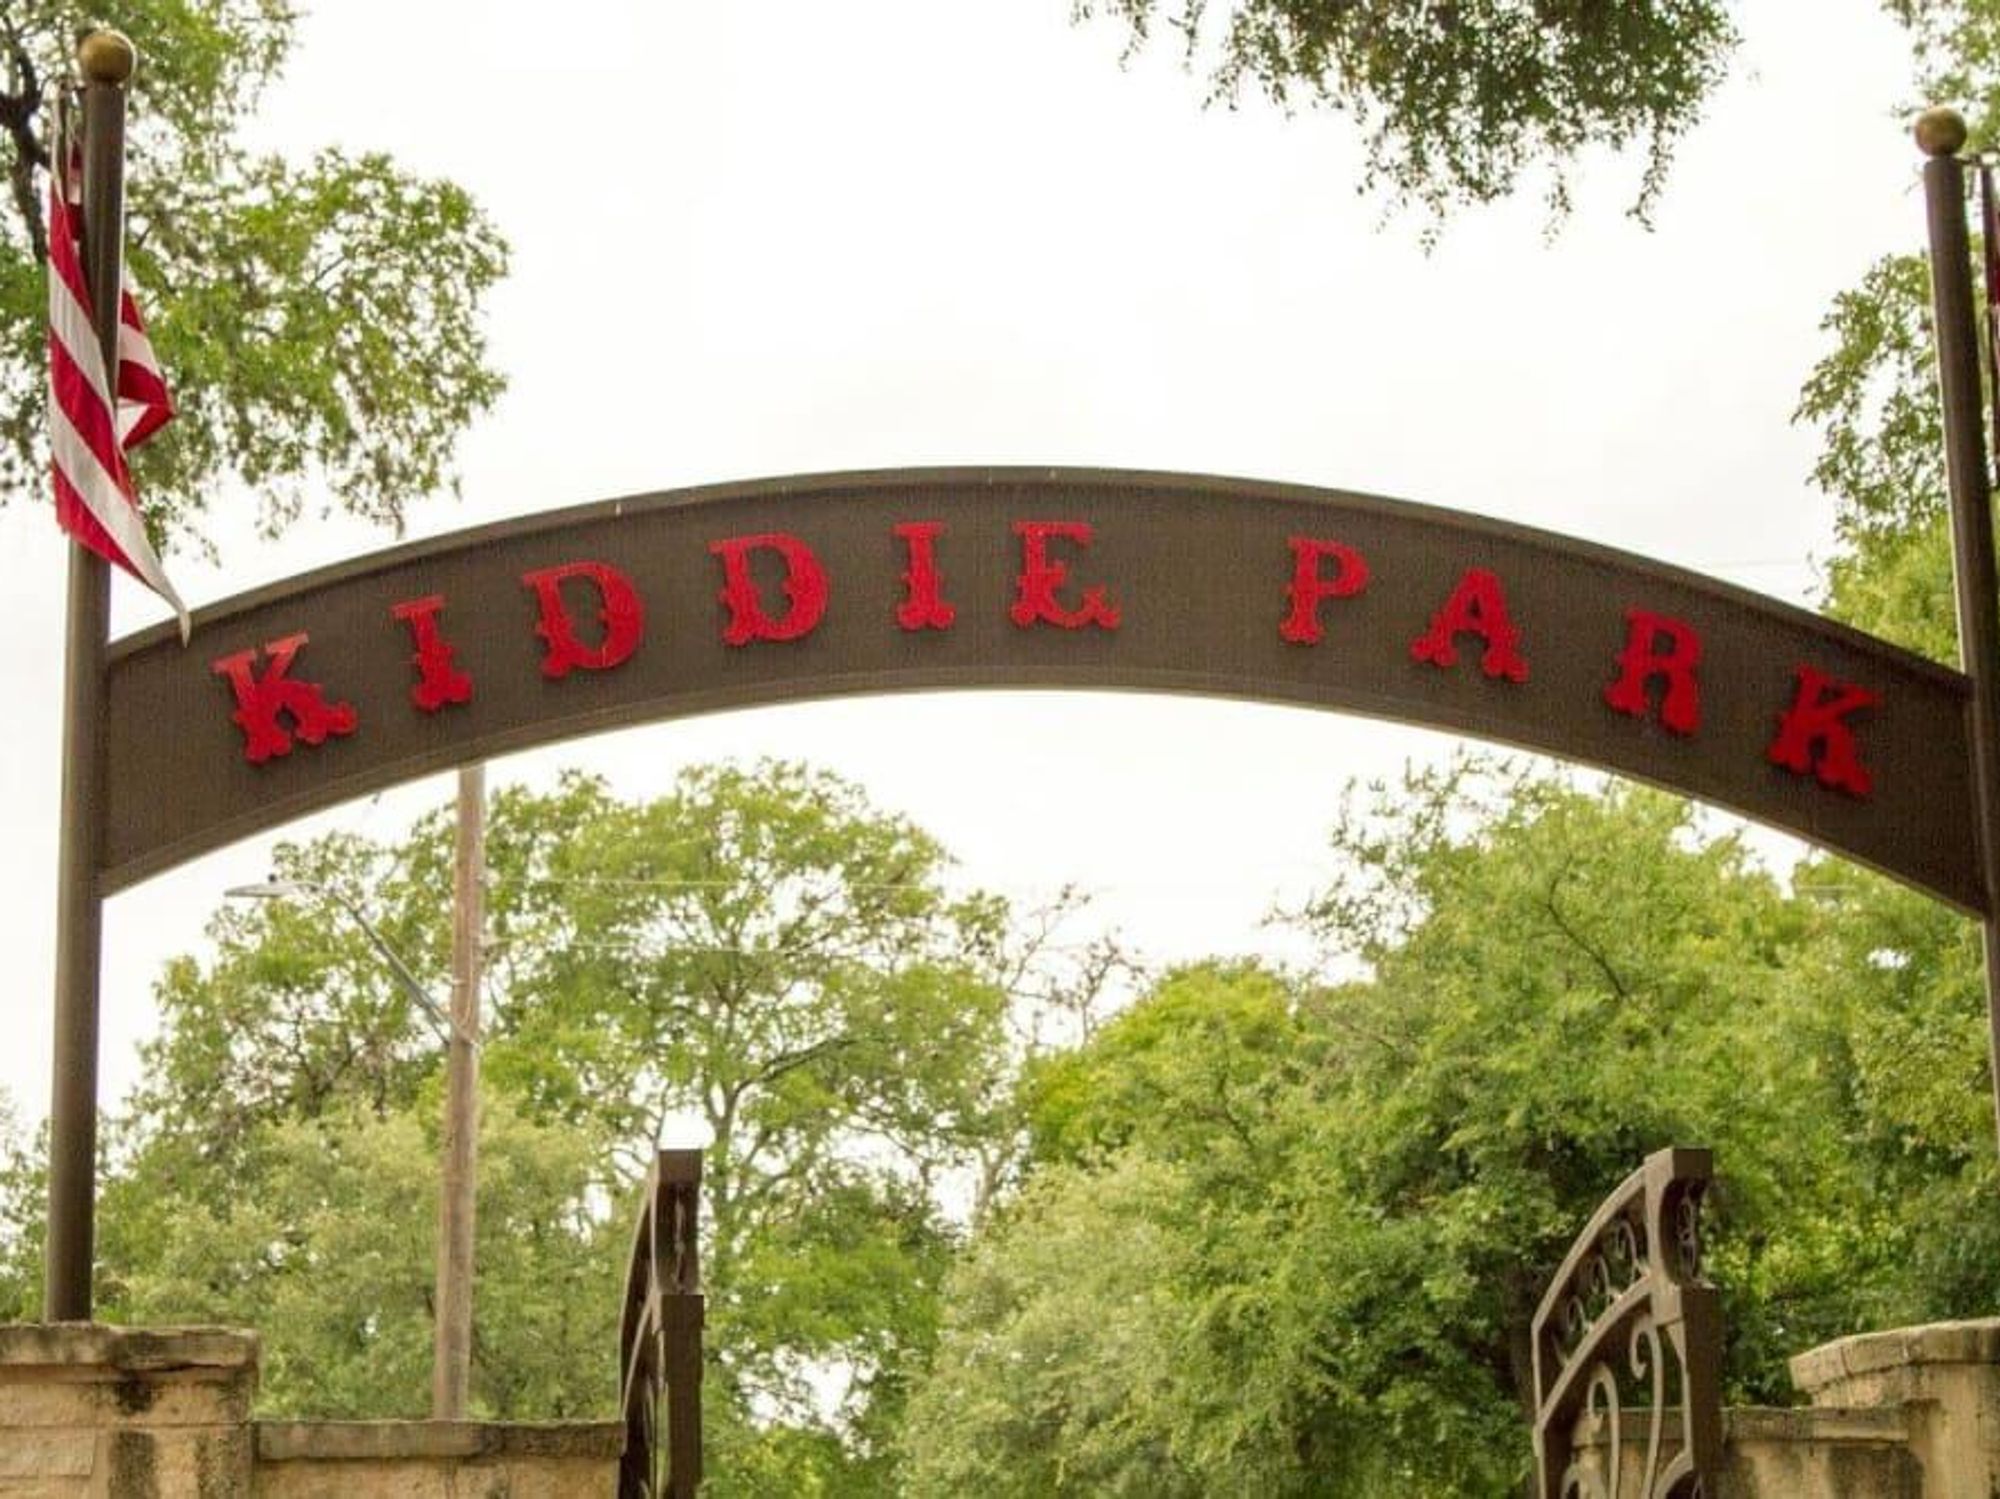 Kiddie Park sign